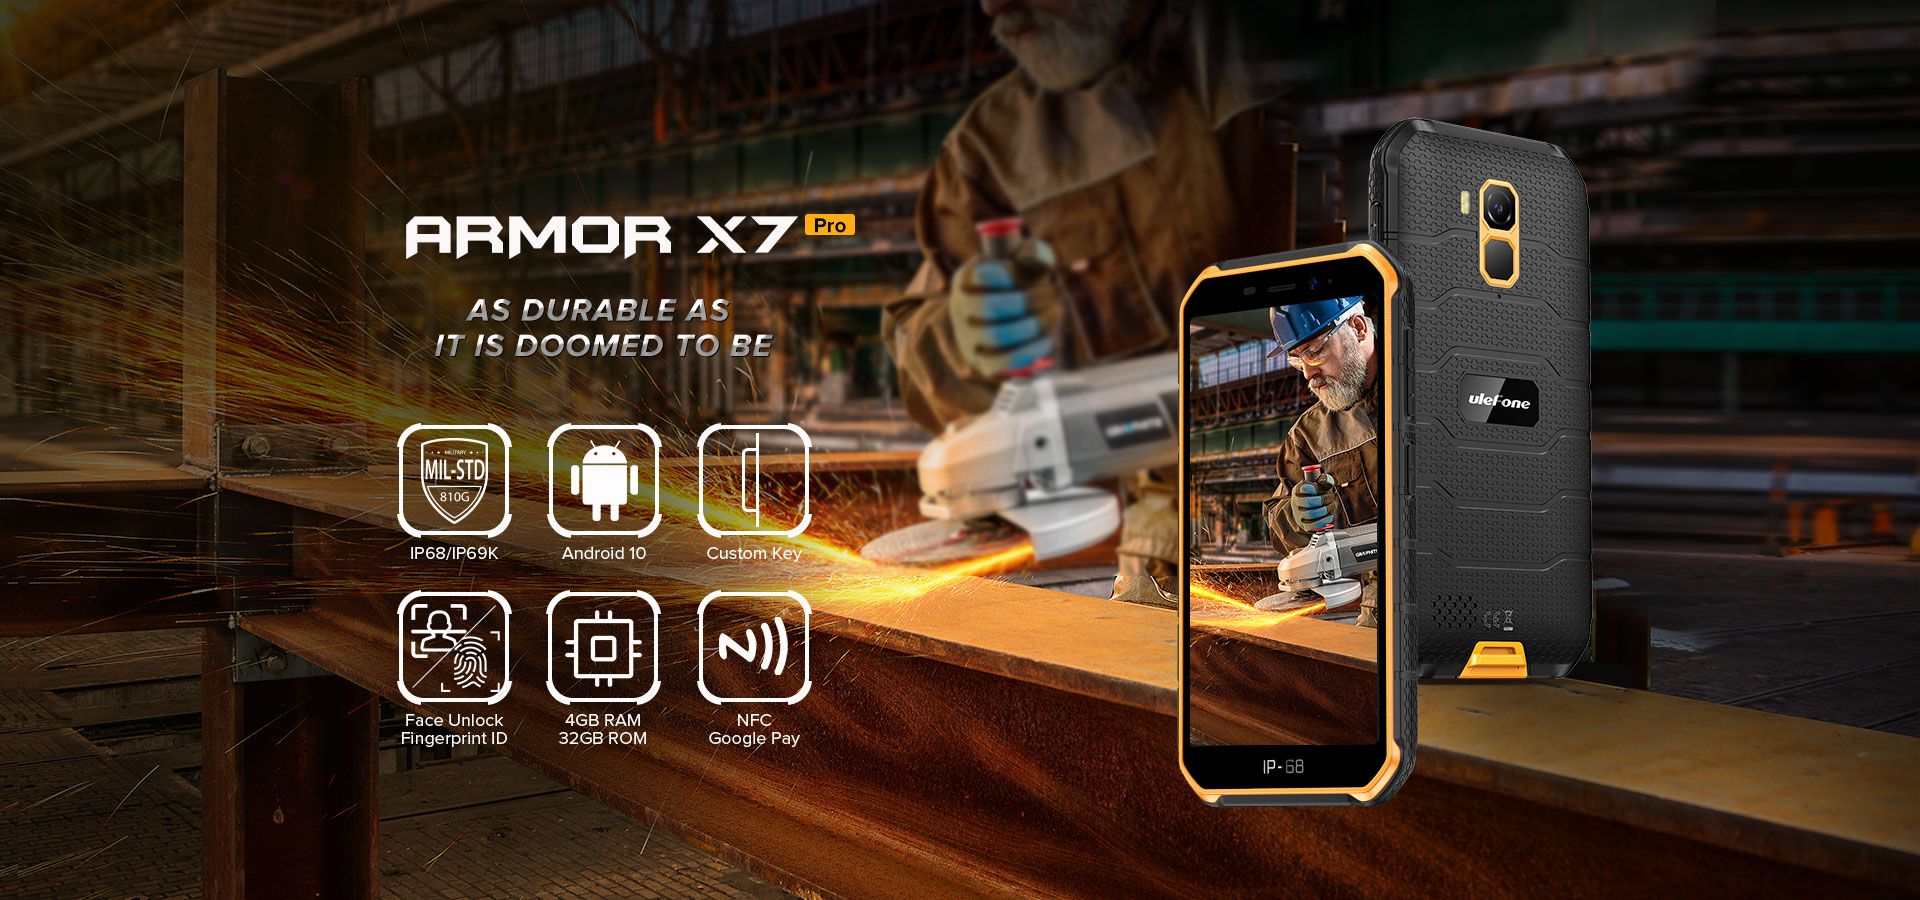 Ulefone Armor X7 ProI P68IP69K Smartphone With 5.0-inch HD Screen